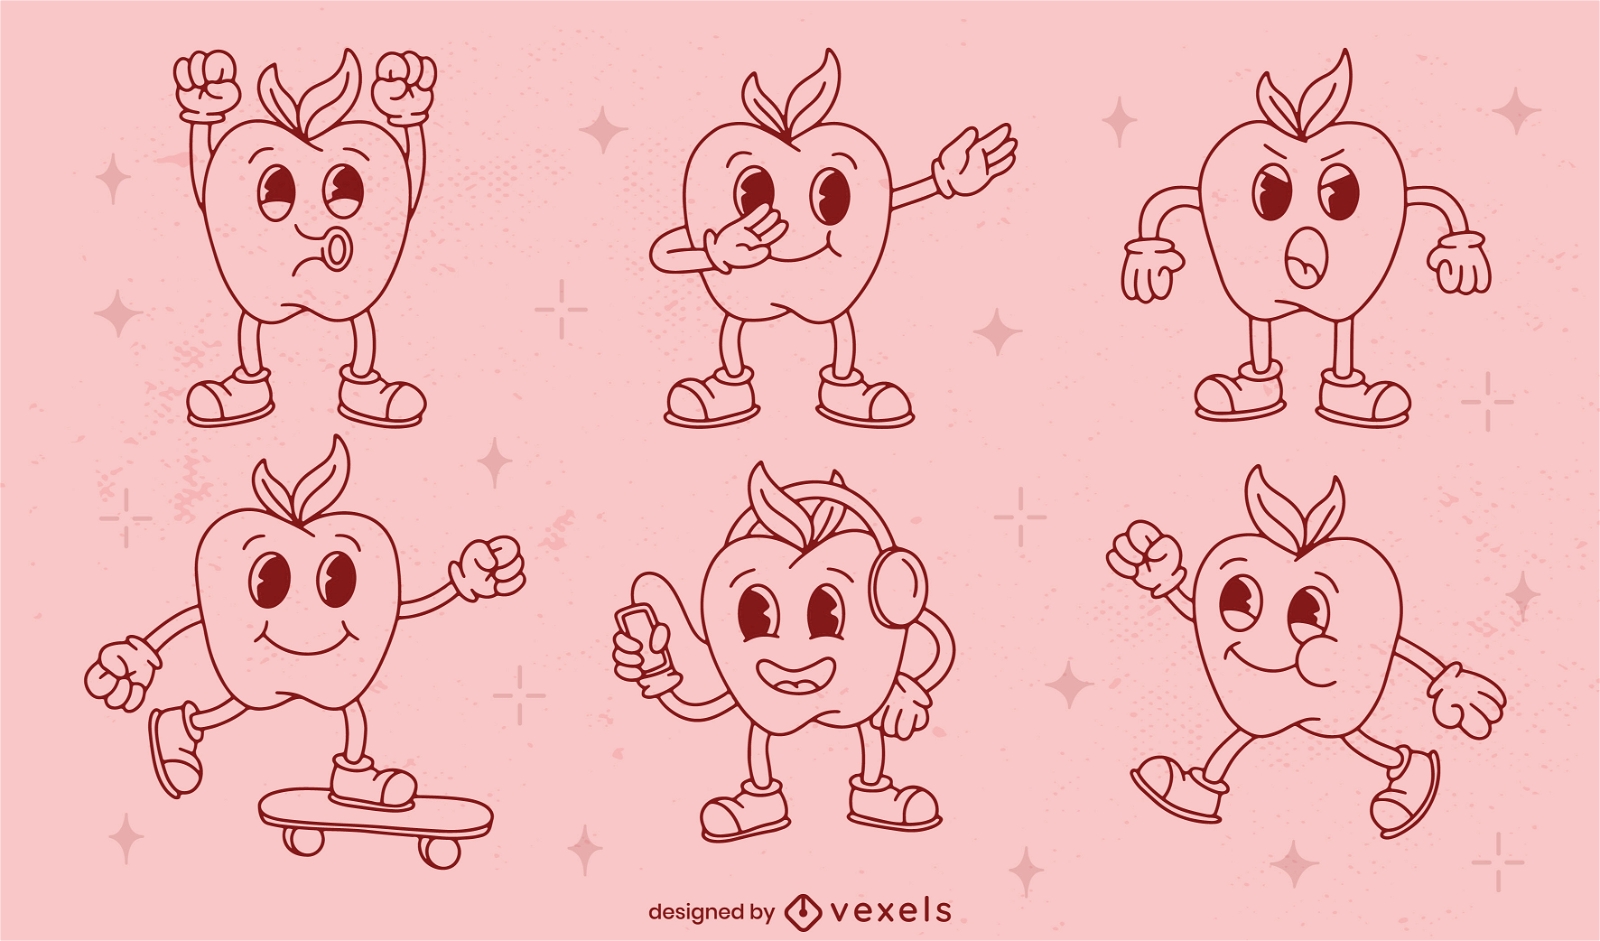 Apple cartoon character set